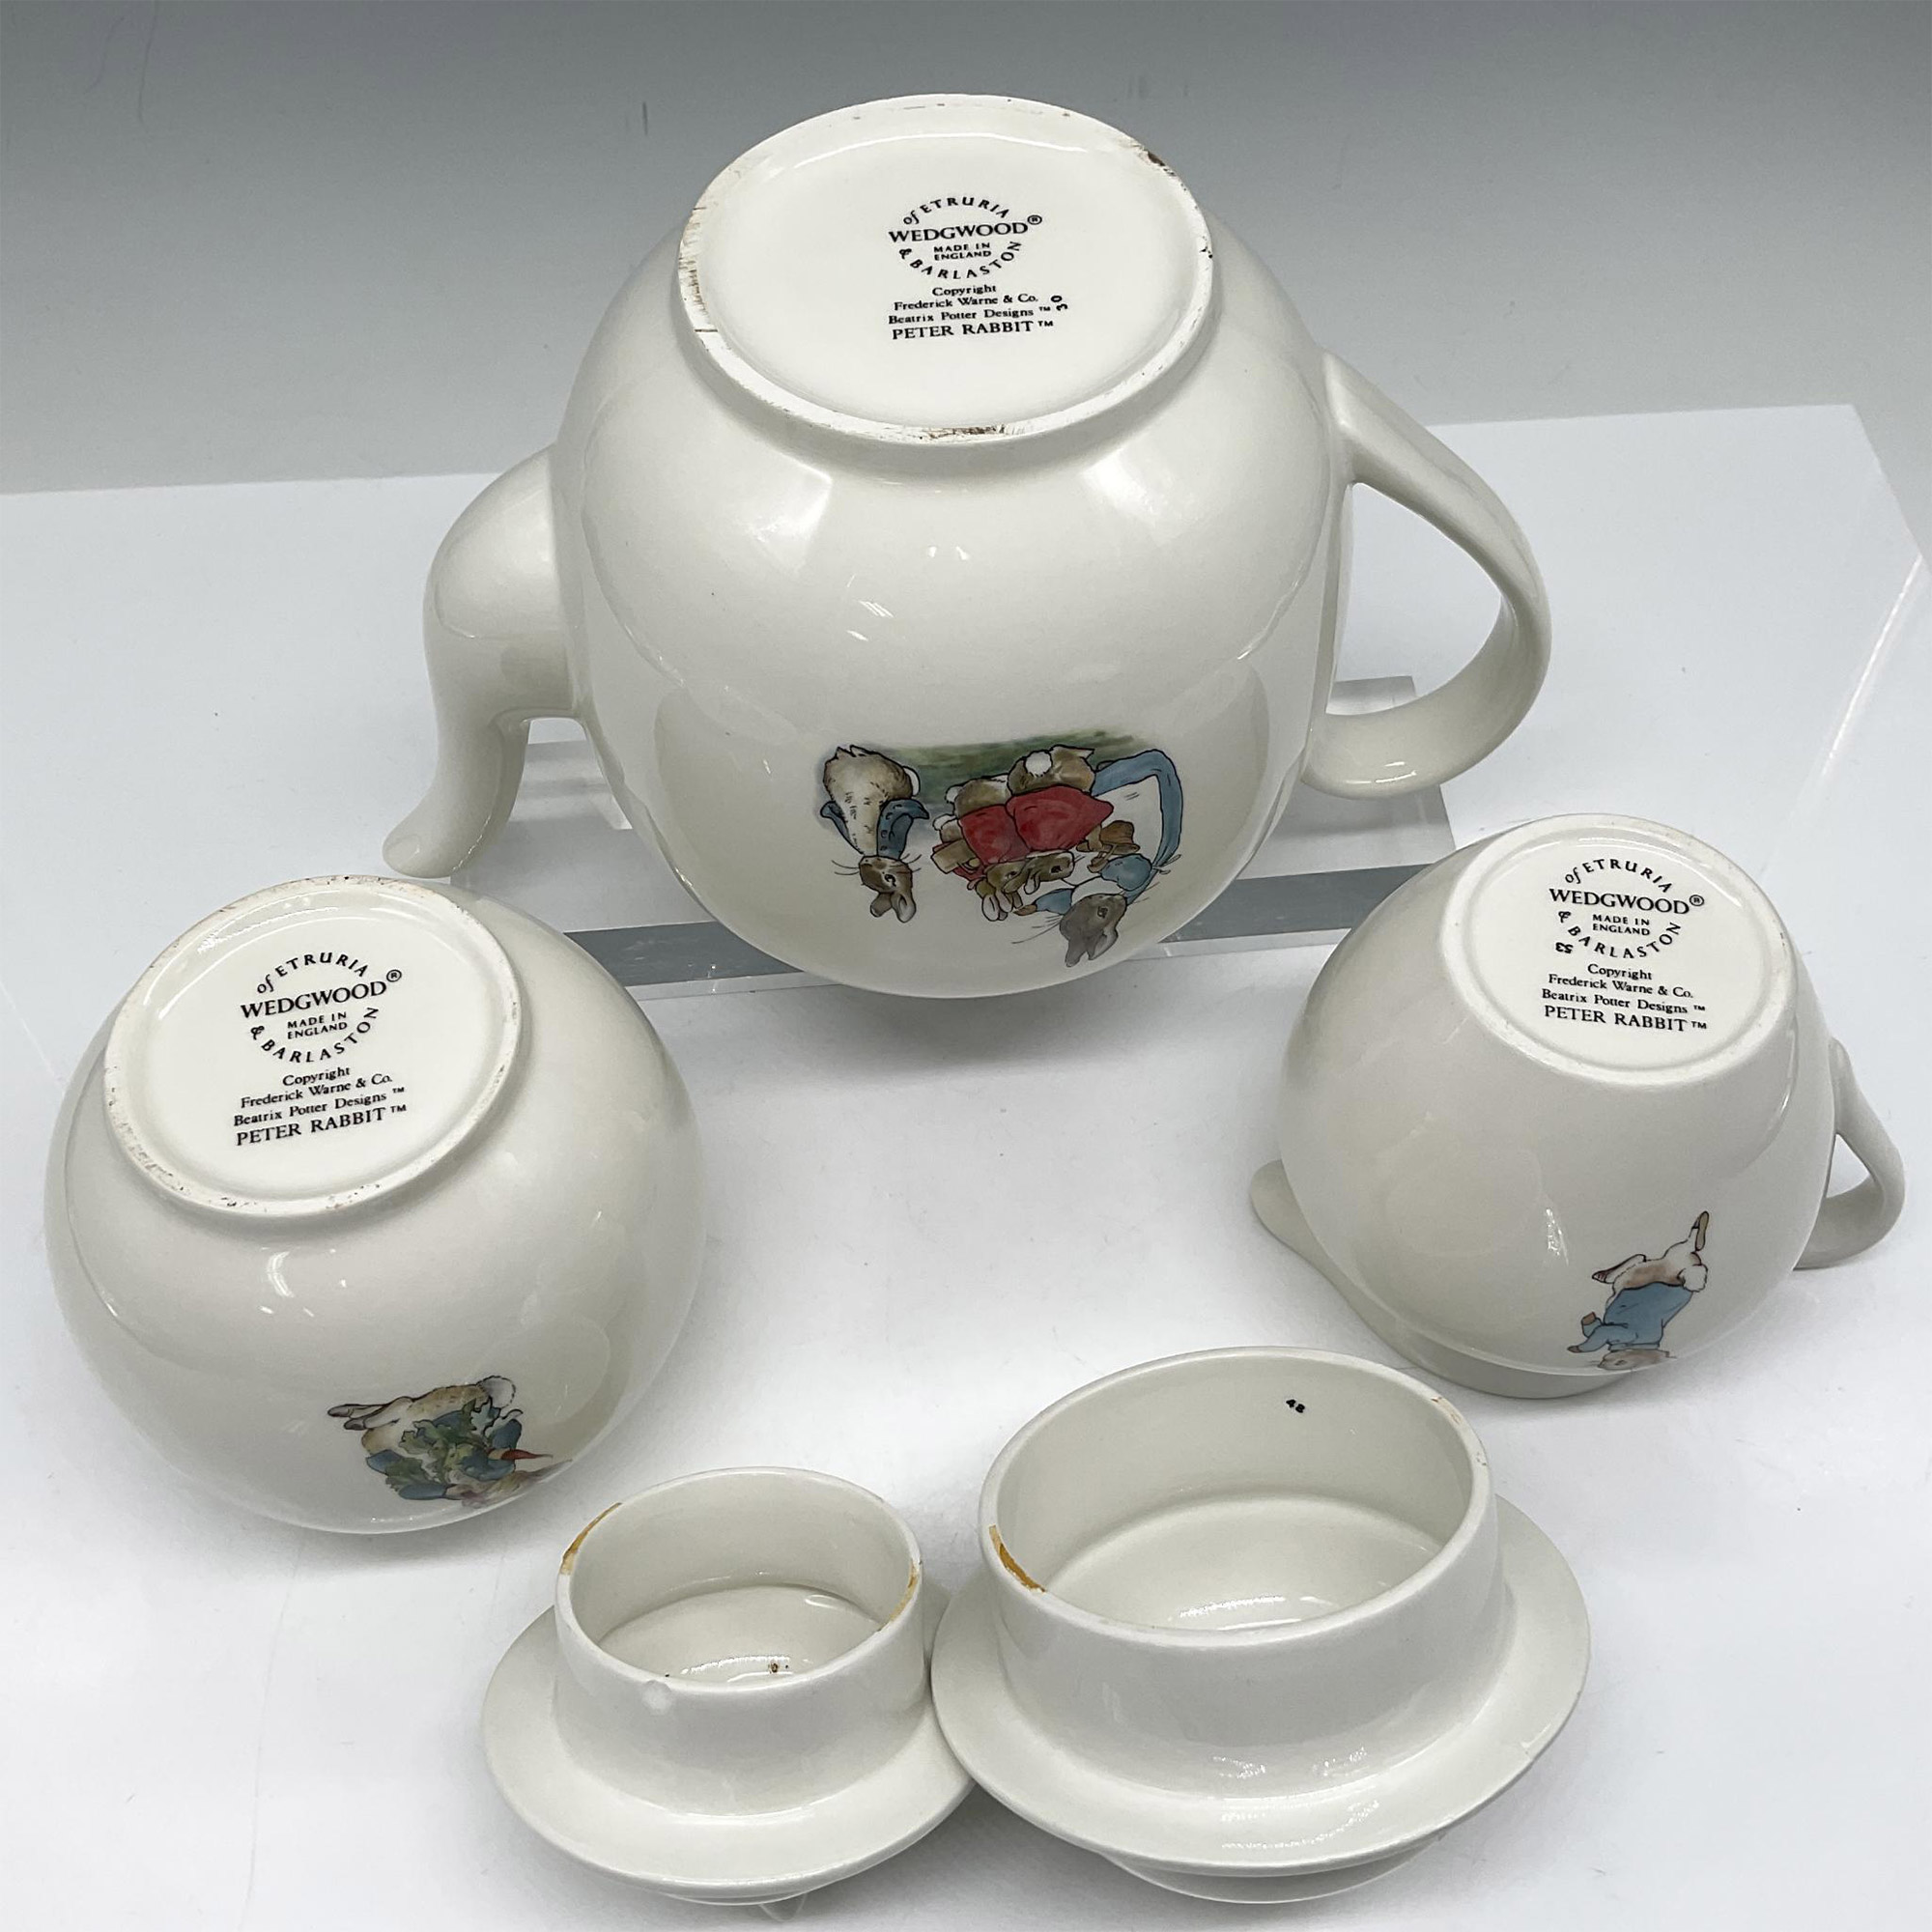 5pc Wedgwood Porcelain Beatrix Potter Peter Rabbit Tea Set - Image 4 of 4